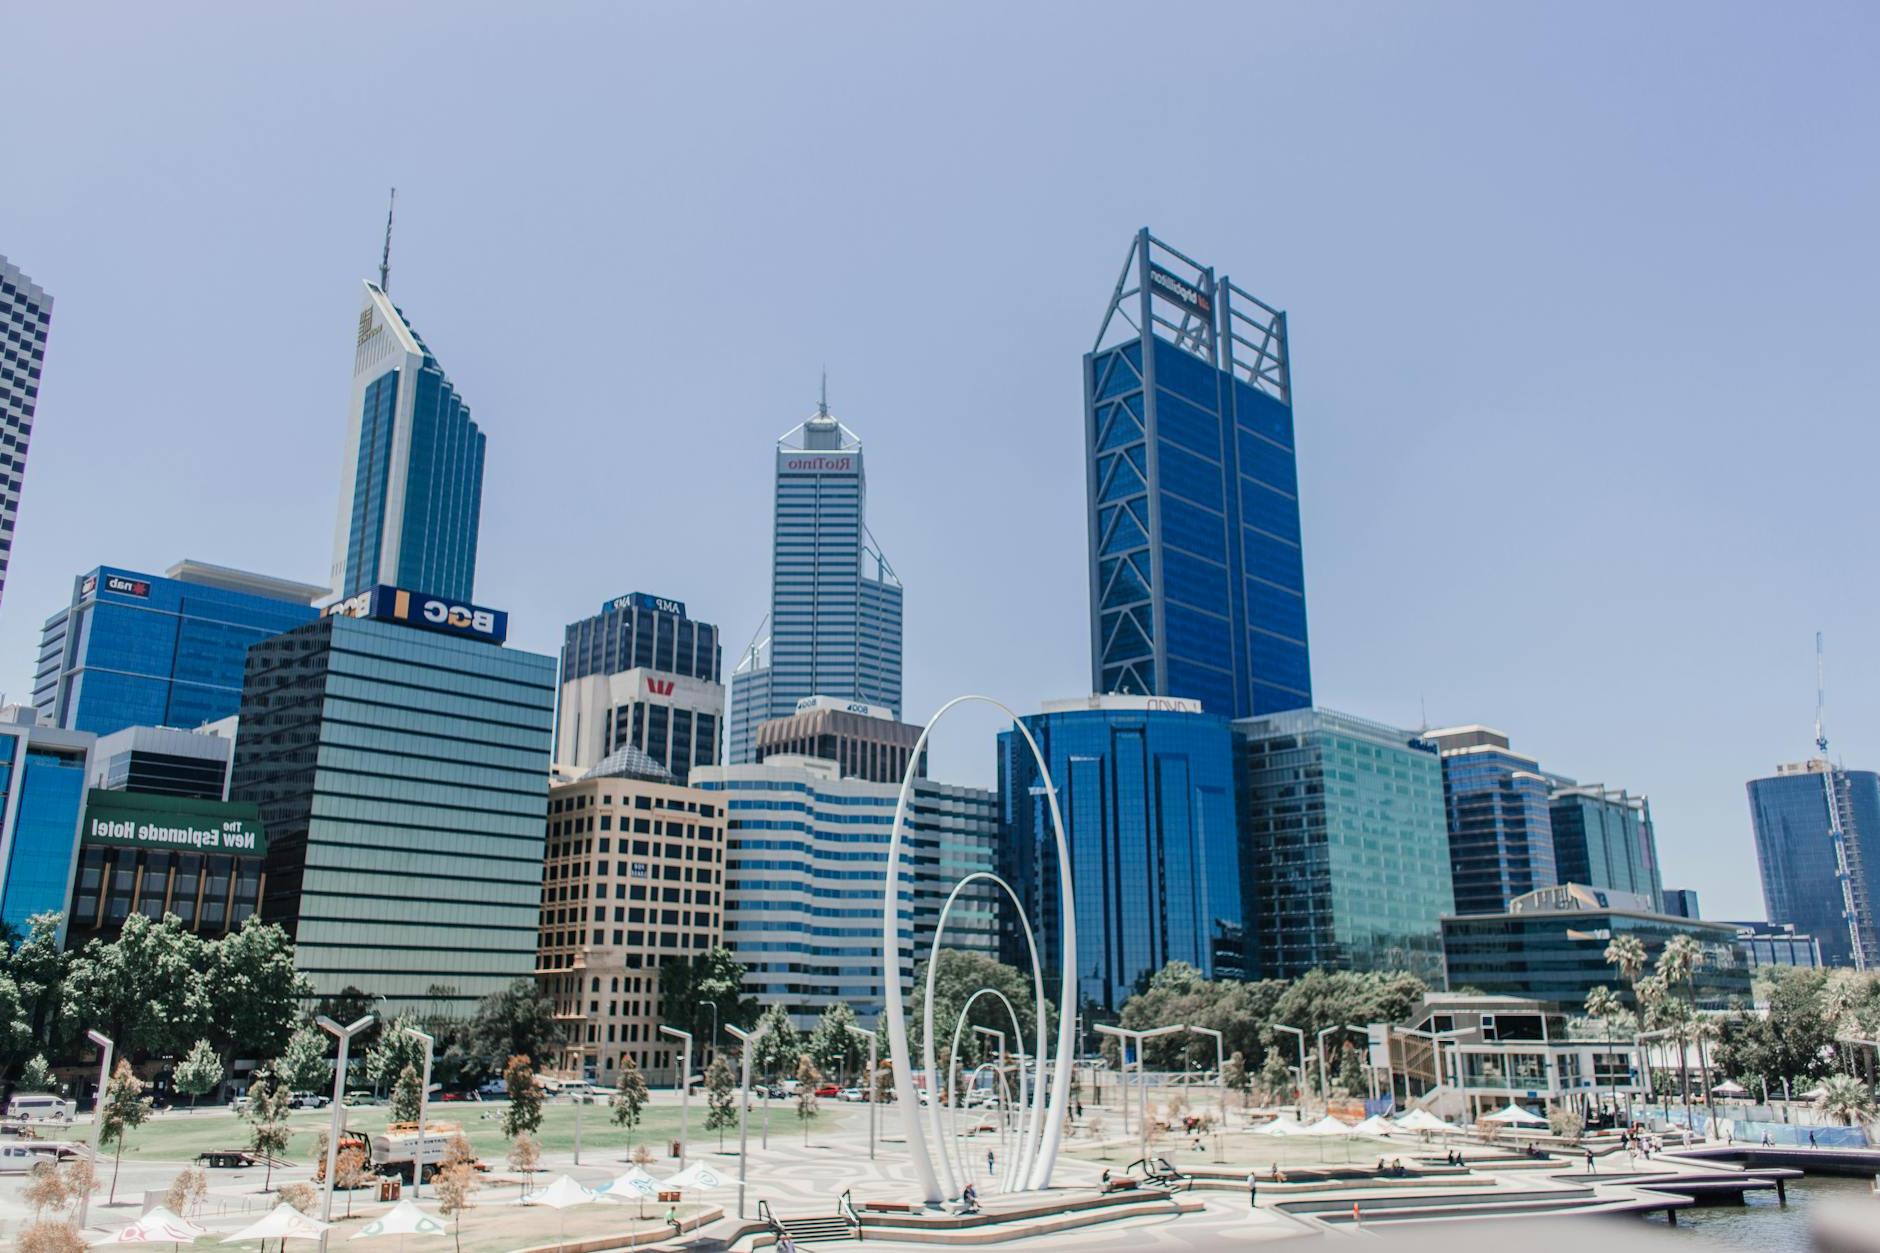 City of Perth under a Blue Sky